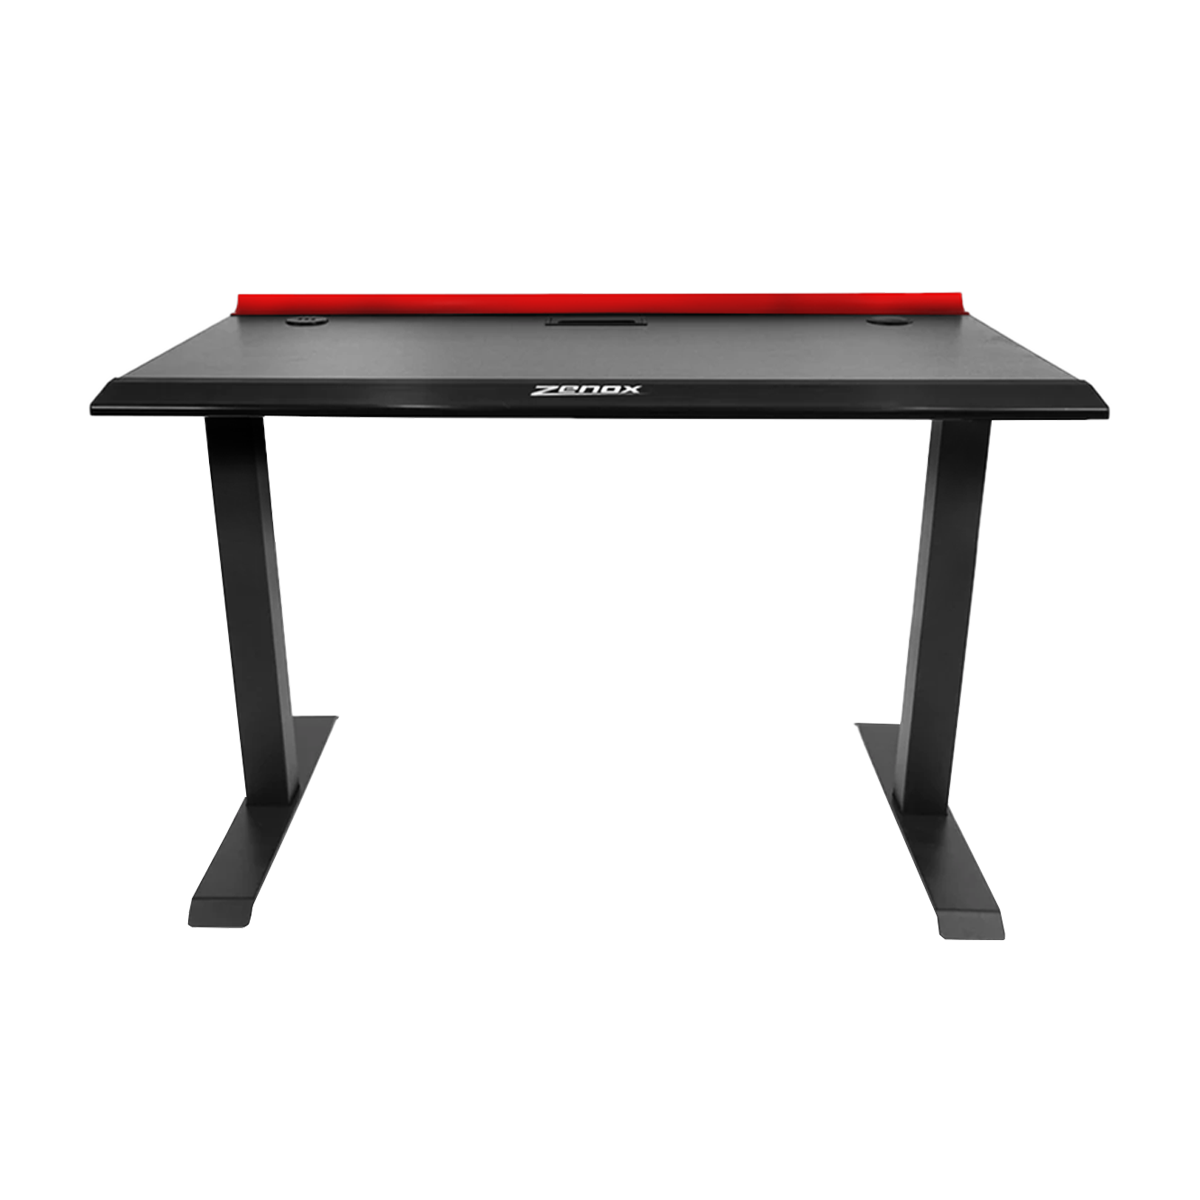 Zenox Artemis Gaming Desk 電競枱 (固定高度) - 1.8米 (Red 紅色)